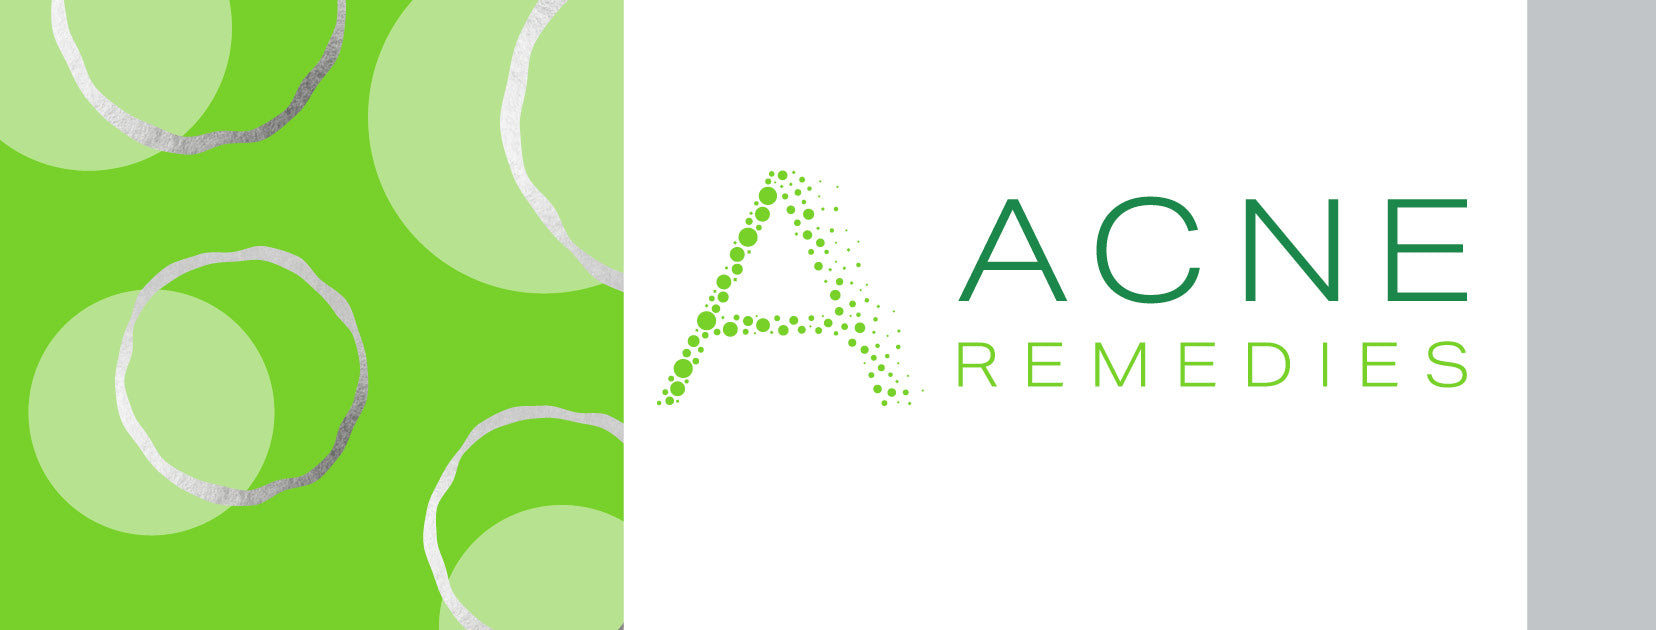 Acne Remedies - Correctives